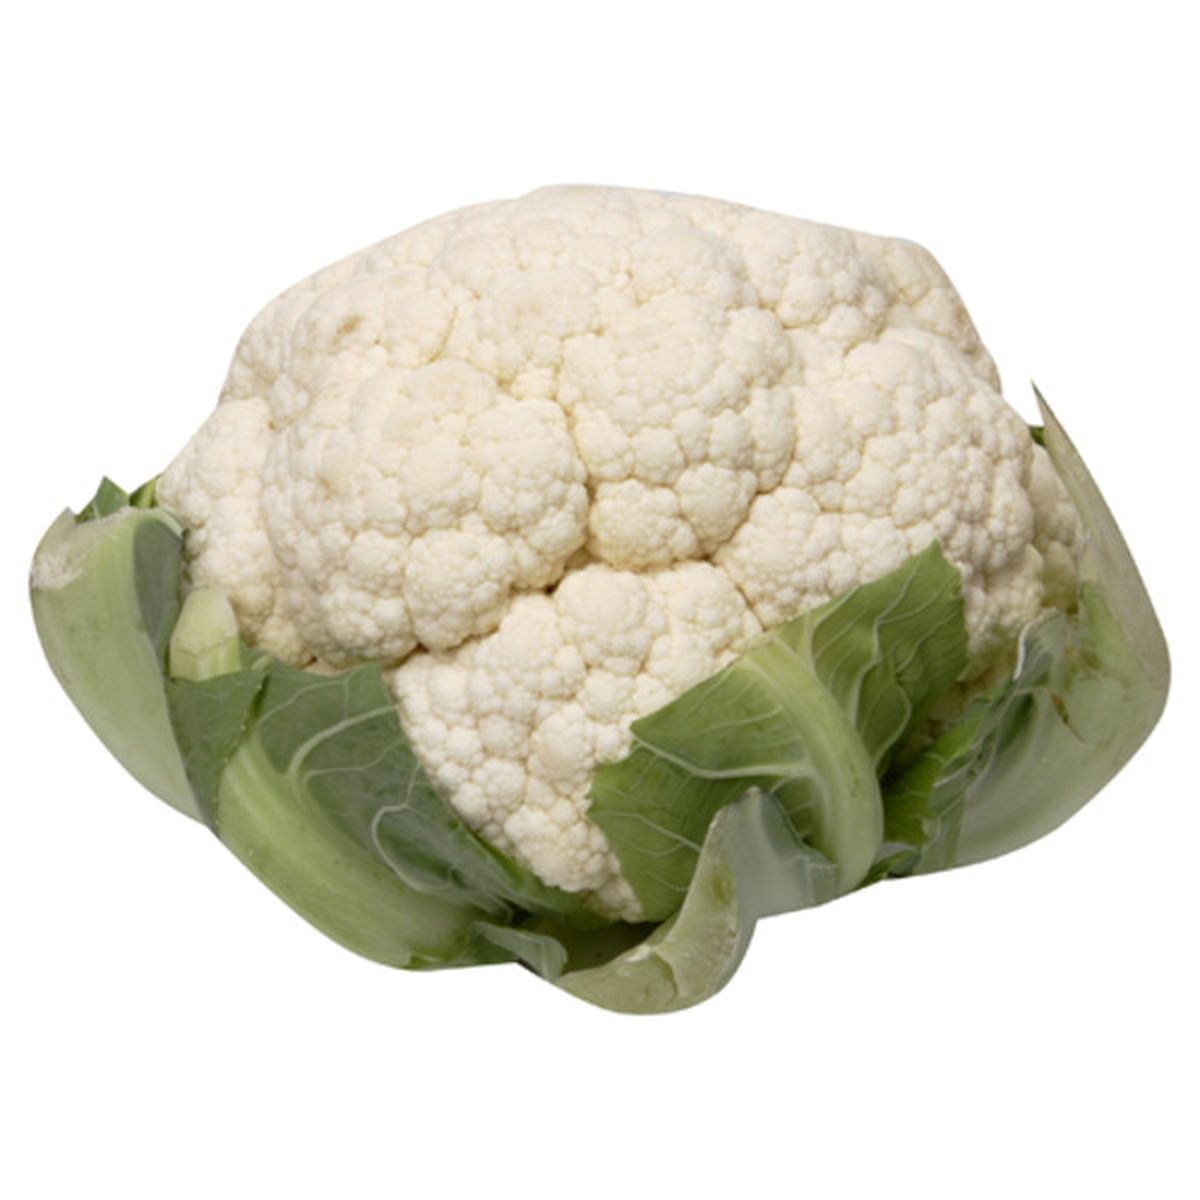 Calories in Wegmans Cauliflower